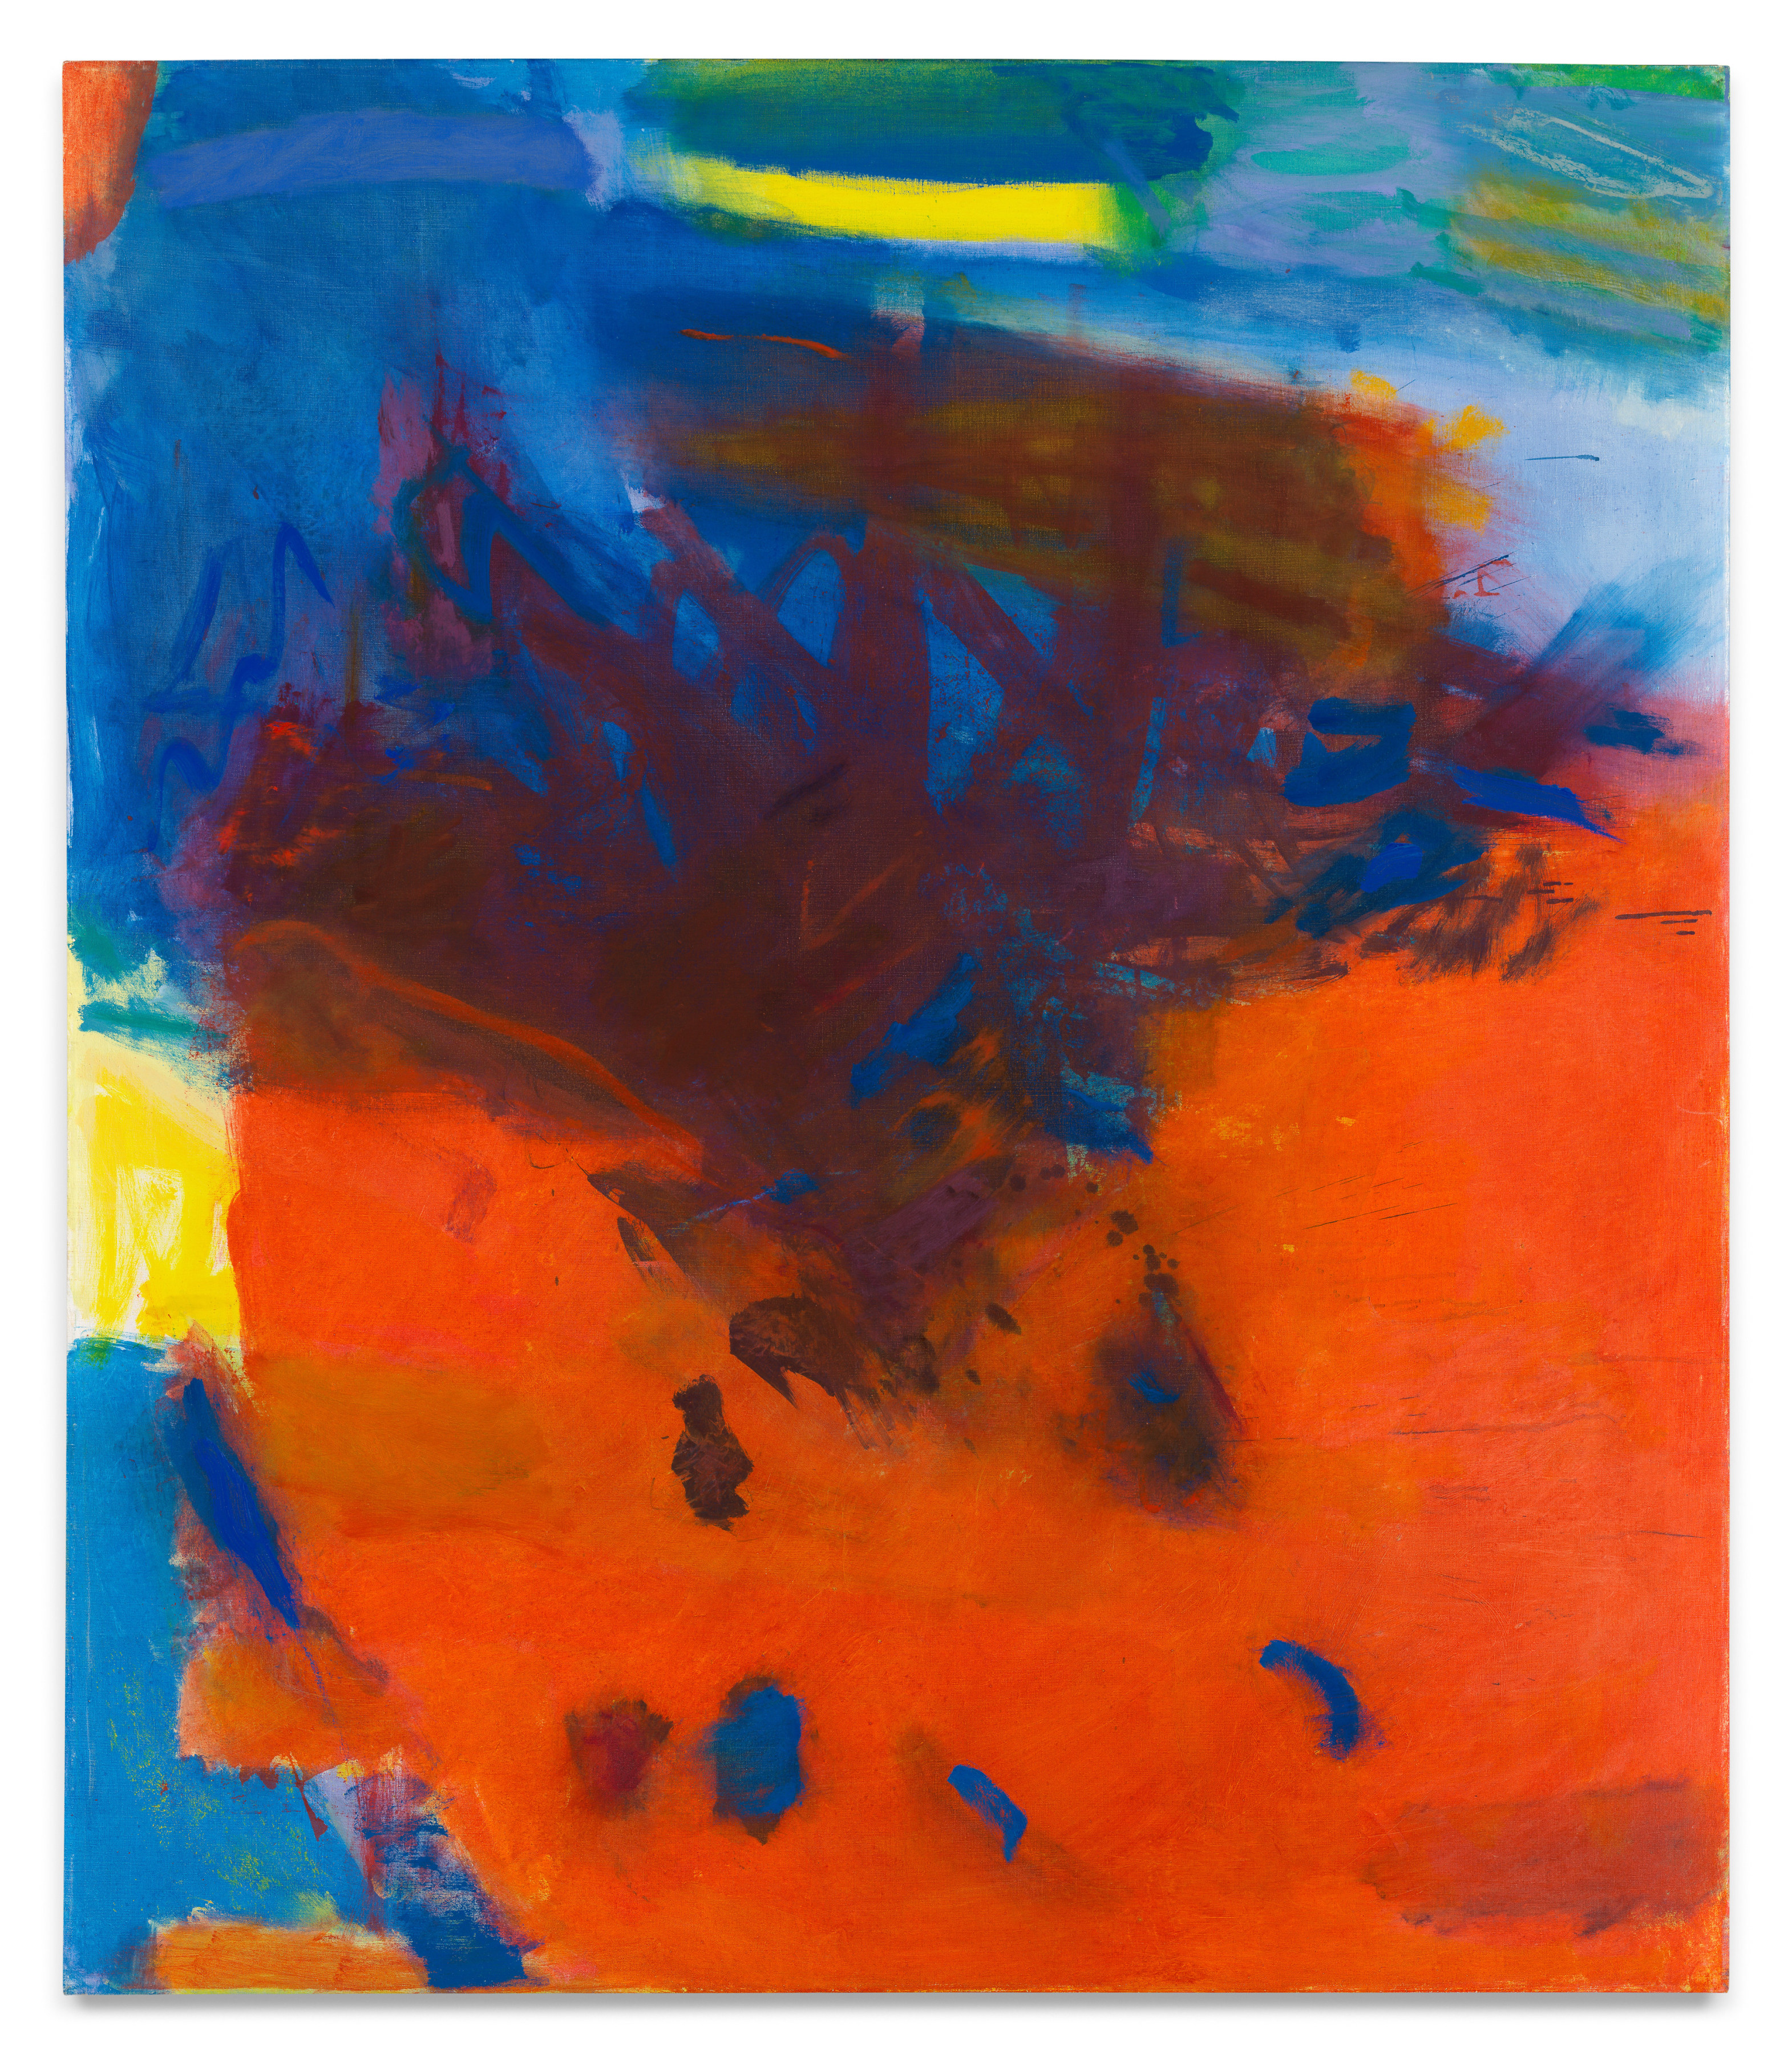 Sundown Crept,&amp;nbsp;1987, Oil on canvas, 60 3/8 x 52 1/8 inches,
153.4 x 132.4 cm,&amp;nbsp;MMG#36152